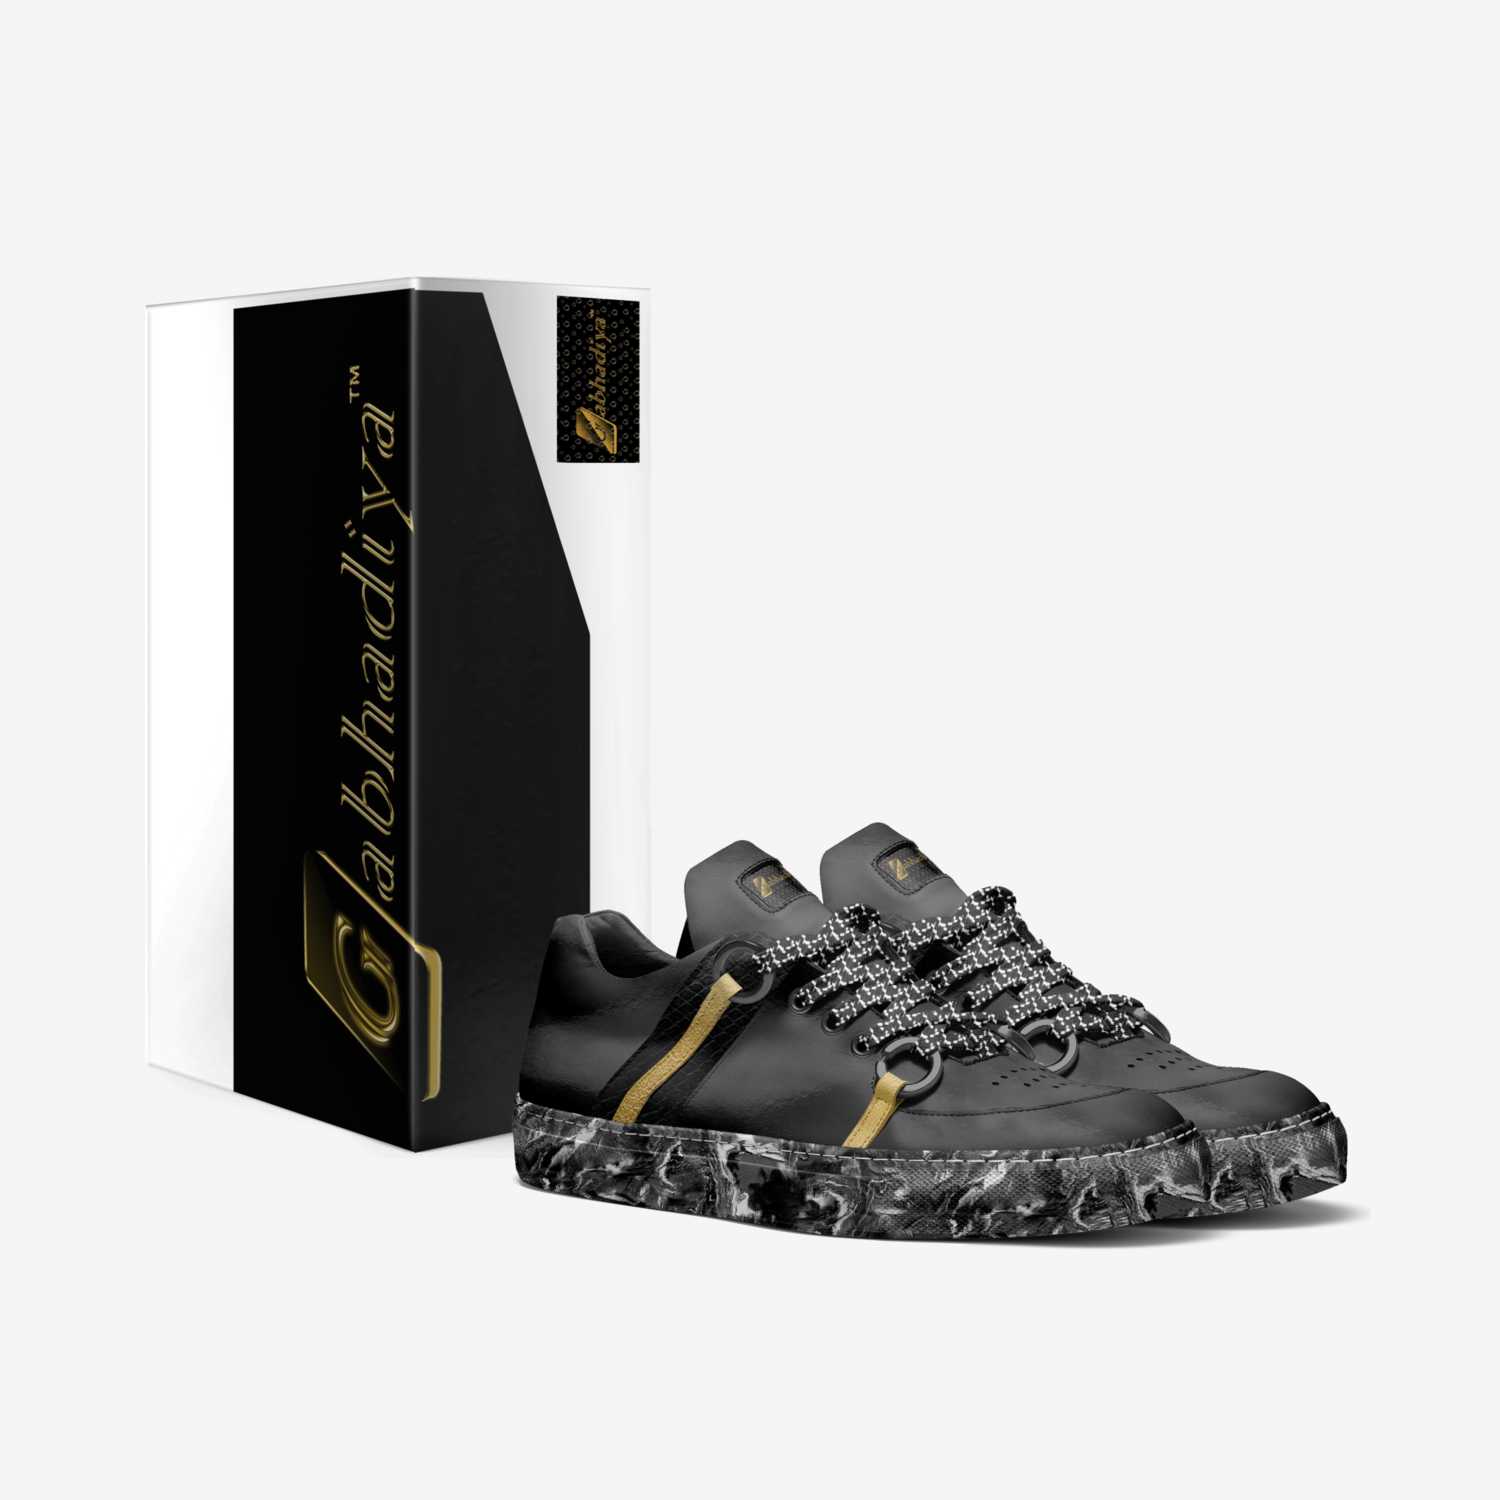 Gabhadiya custom made in Italy shoes by Lifestyle Lavish | Box view